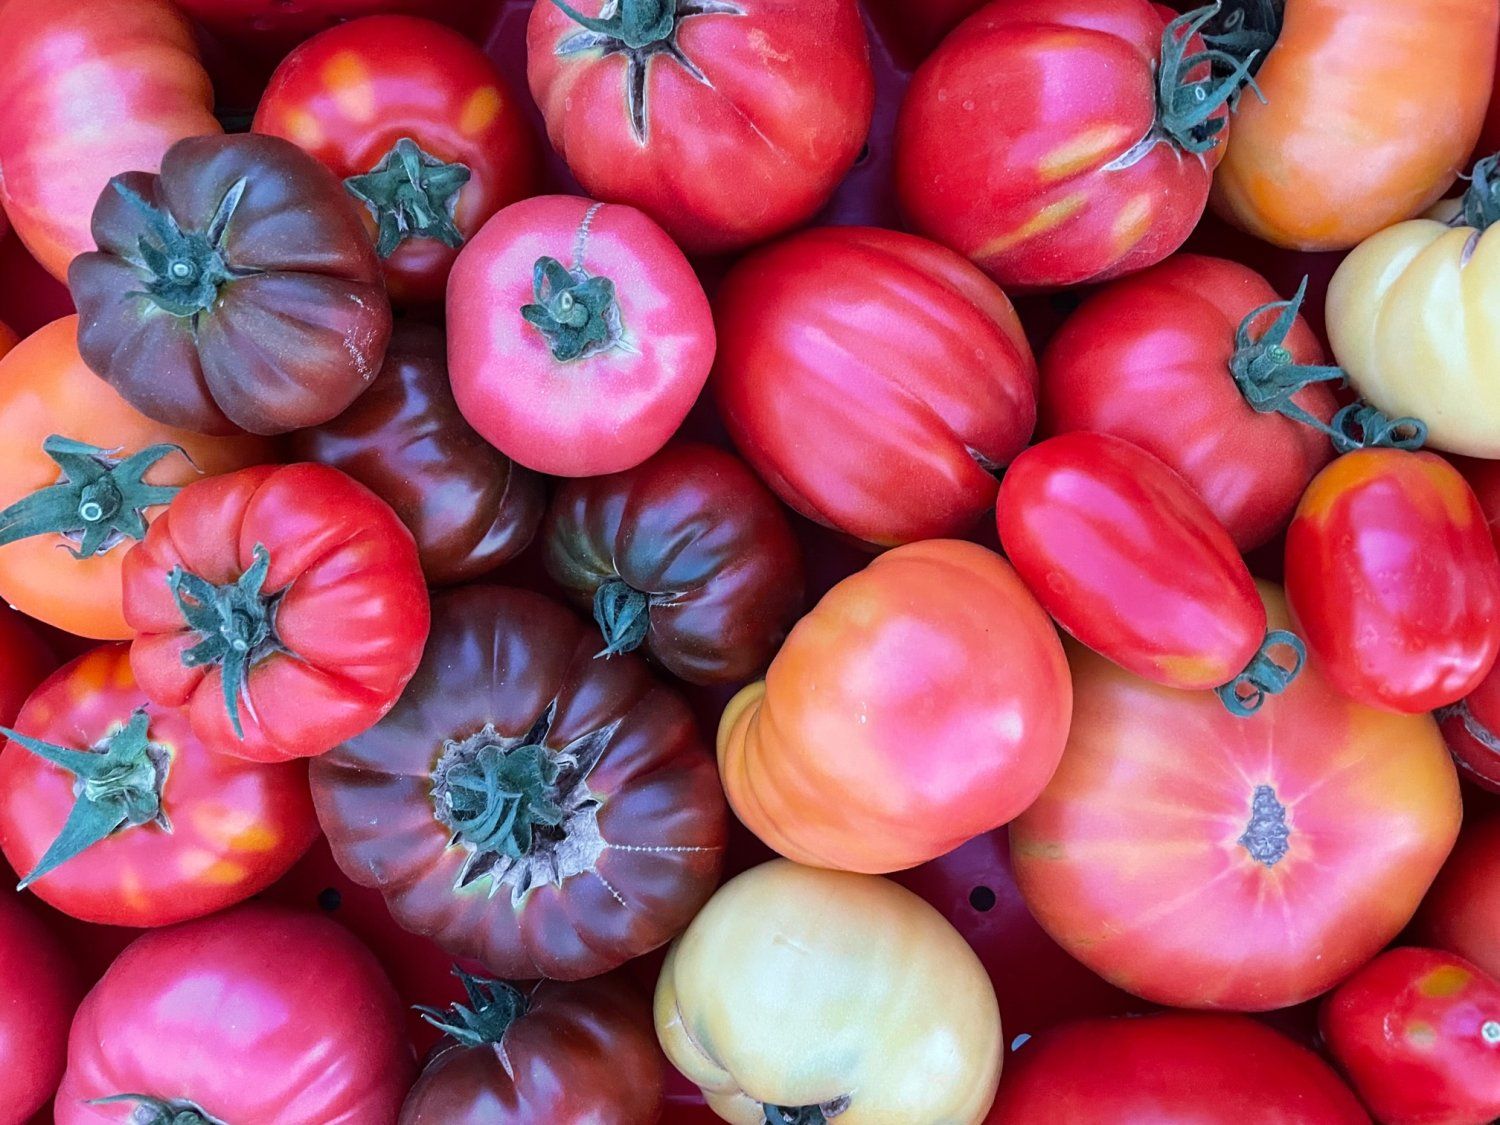 Next Happening: So Many Tomatoes!